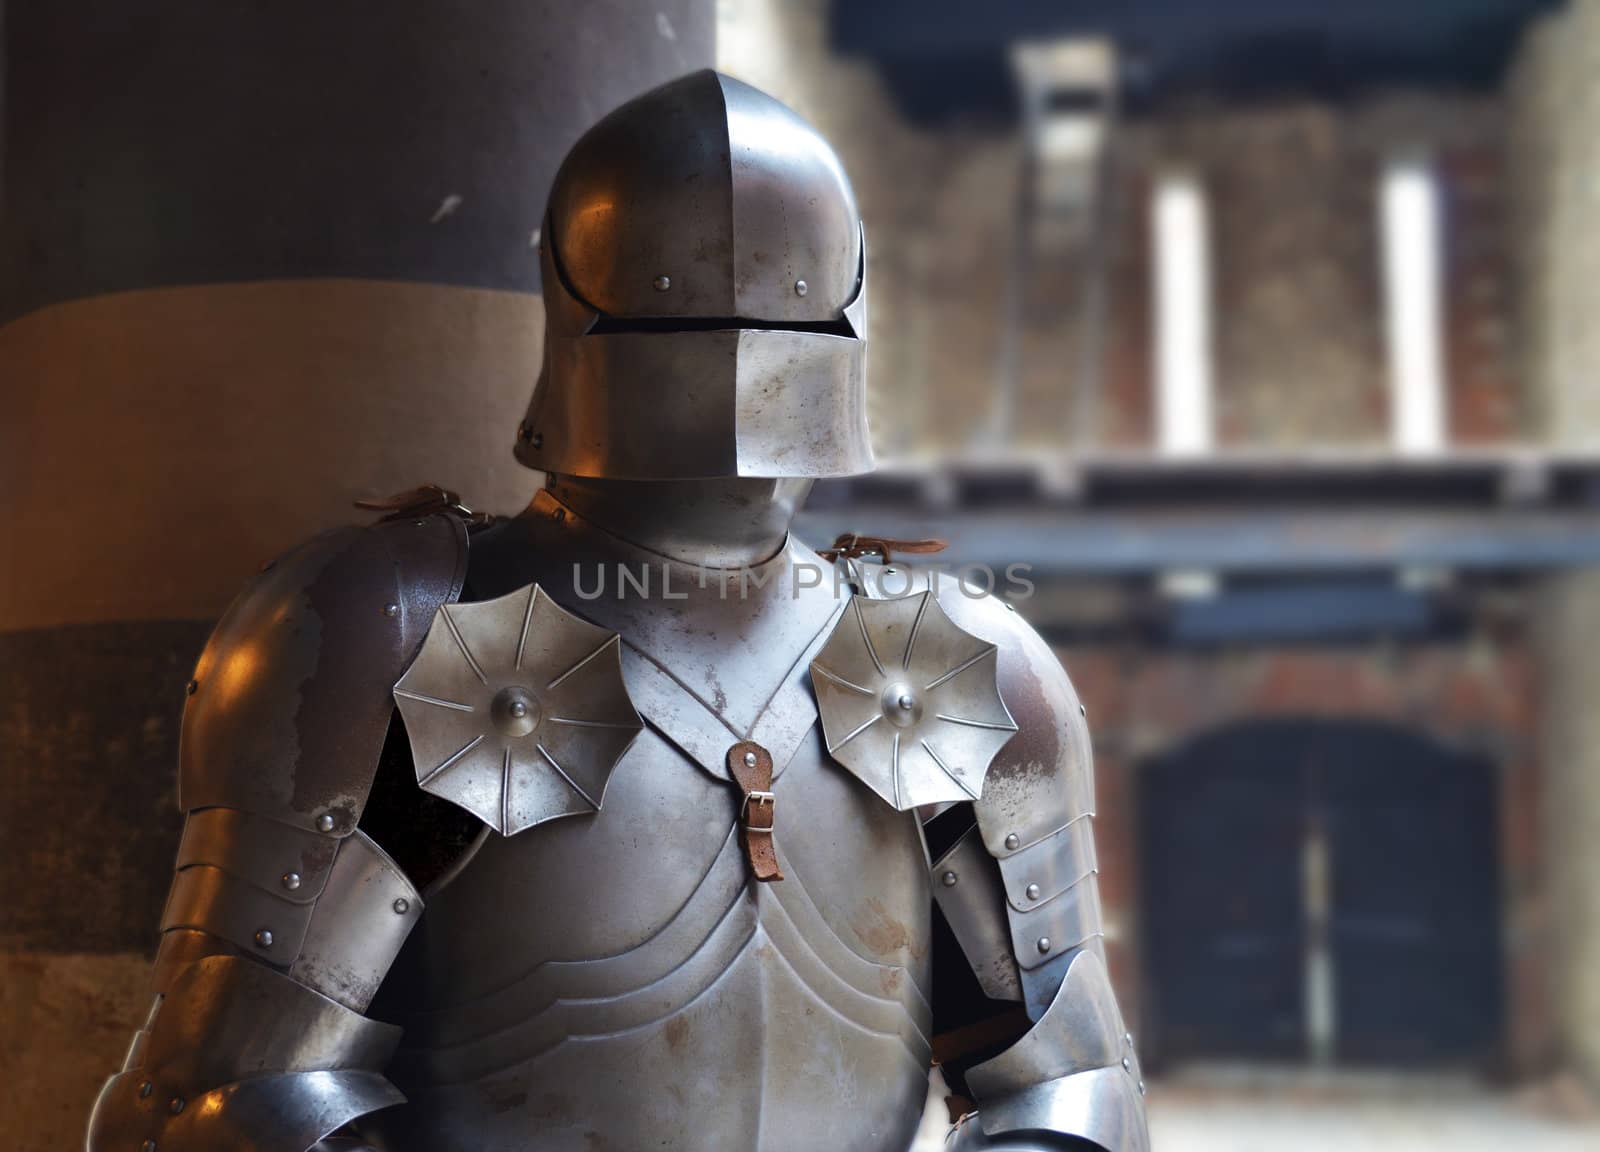 Medieval armor inside a castle by artofphoto